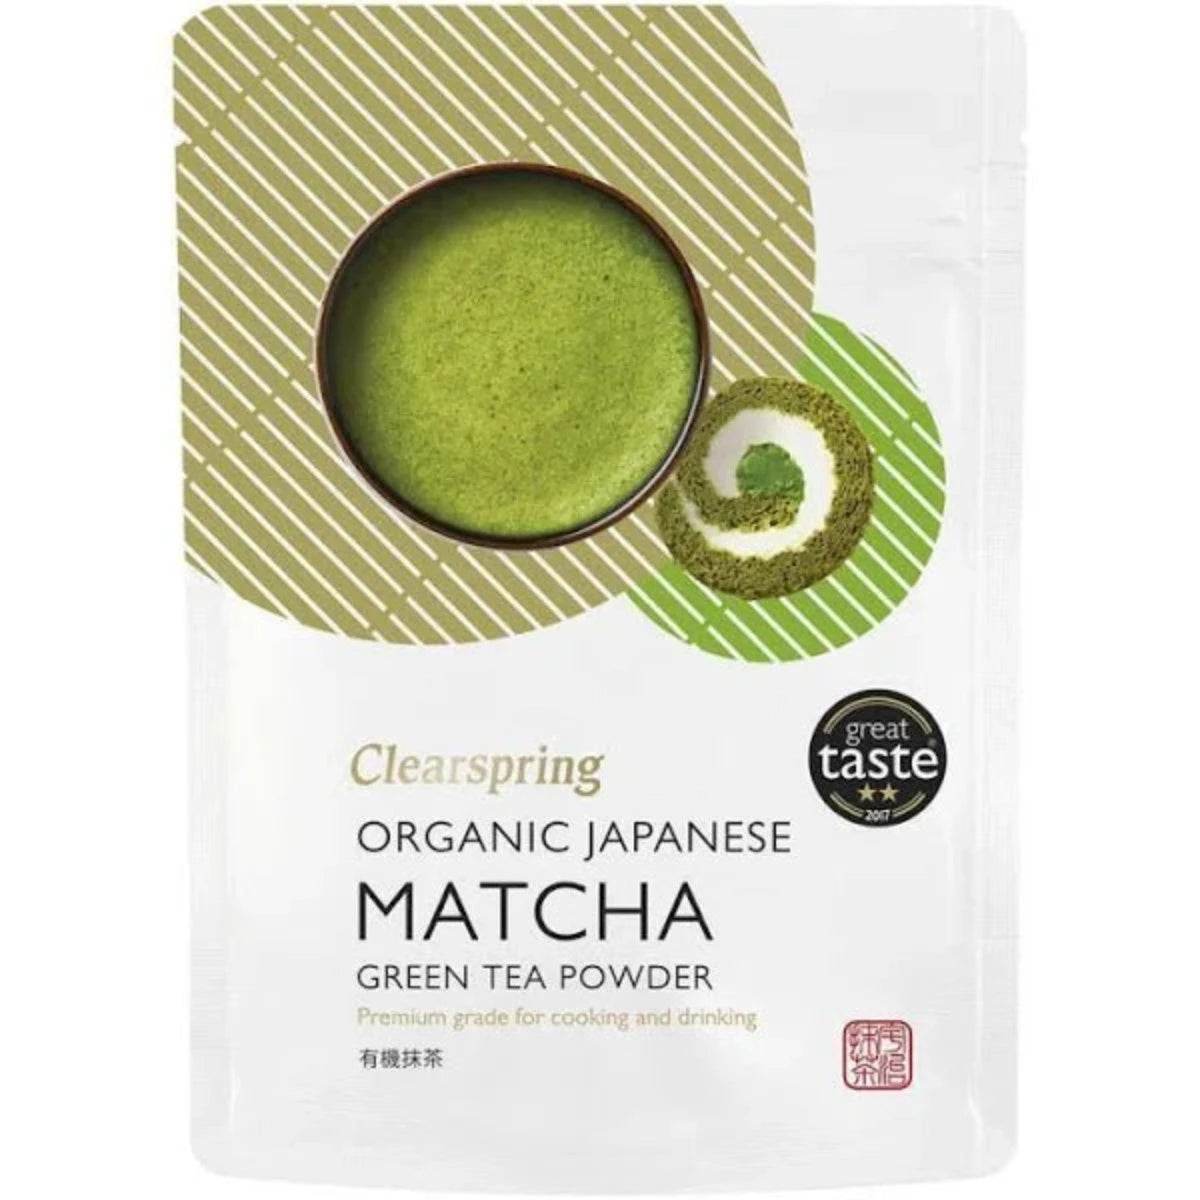 Clearspring Organic Japanese Matcha 40g